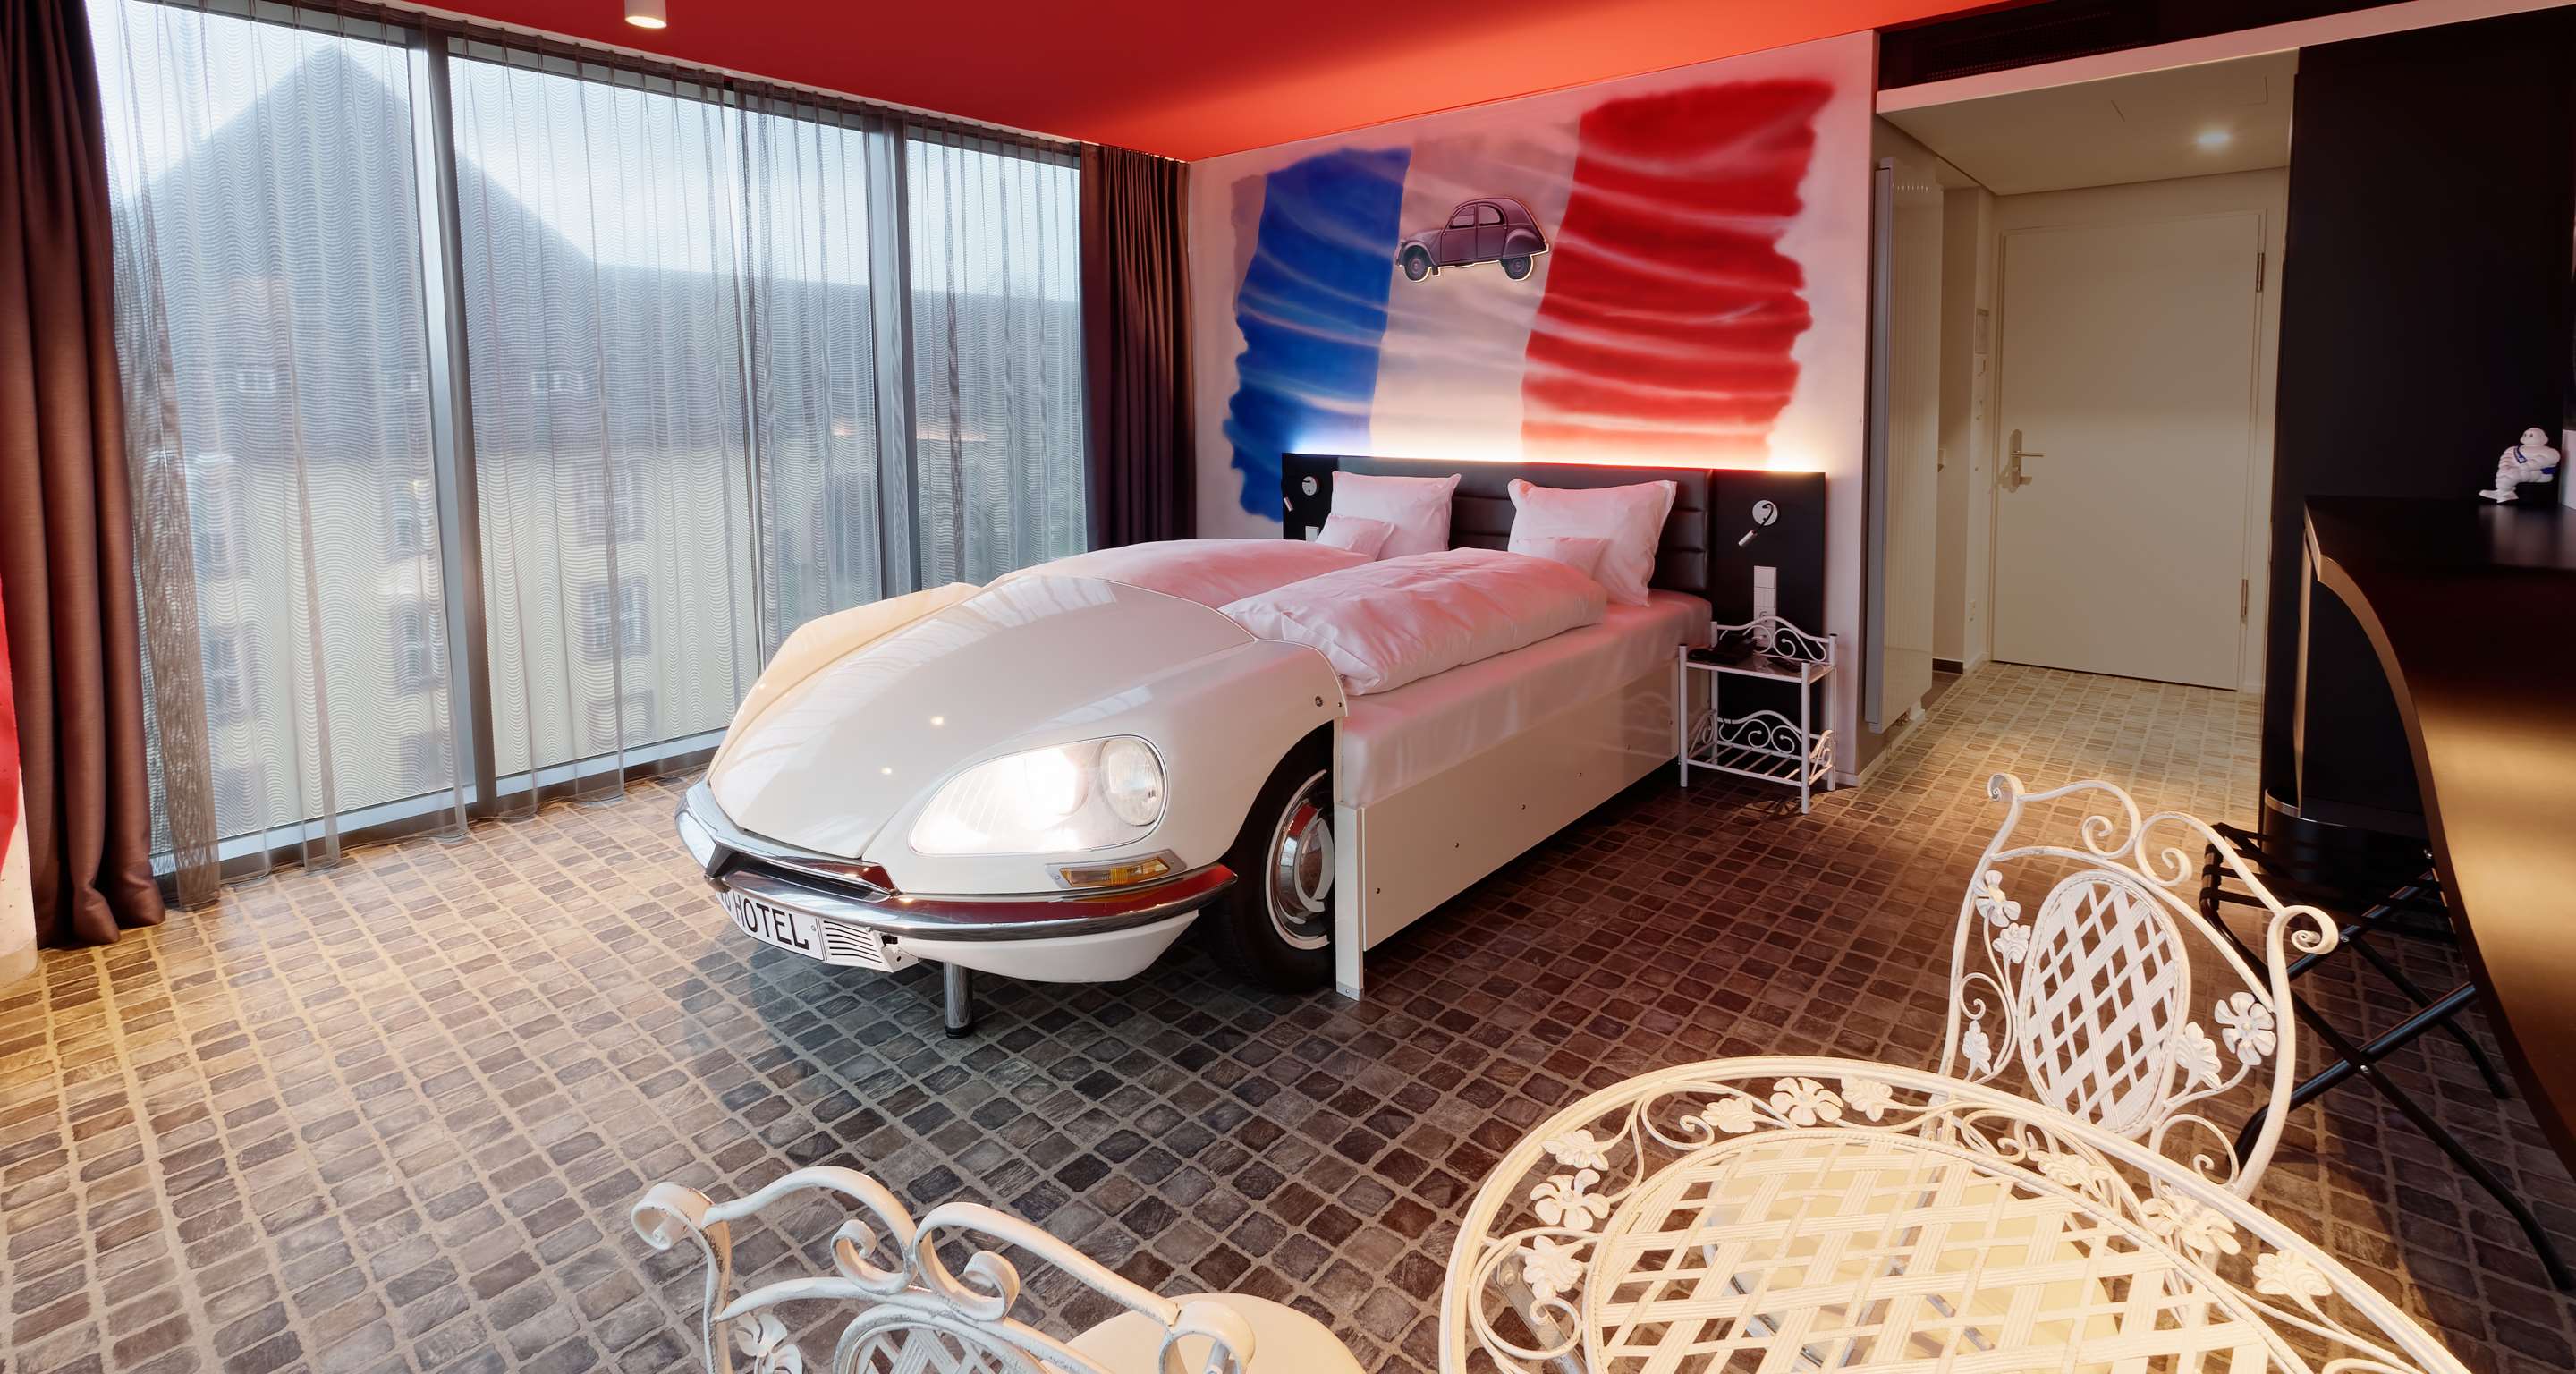 Bilder V8 Hotel Motorworld Region Stuttgart, BW Premier Collection